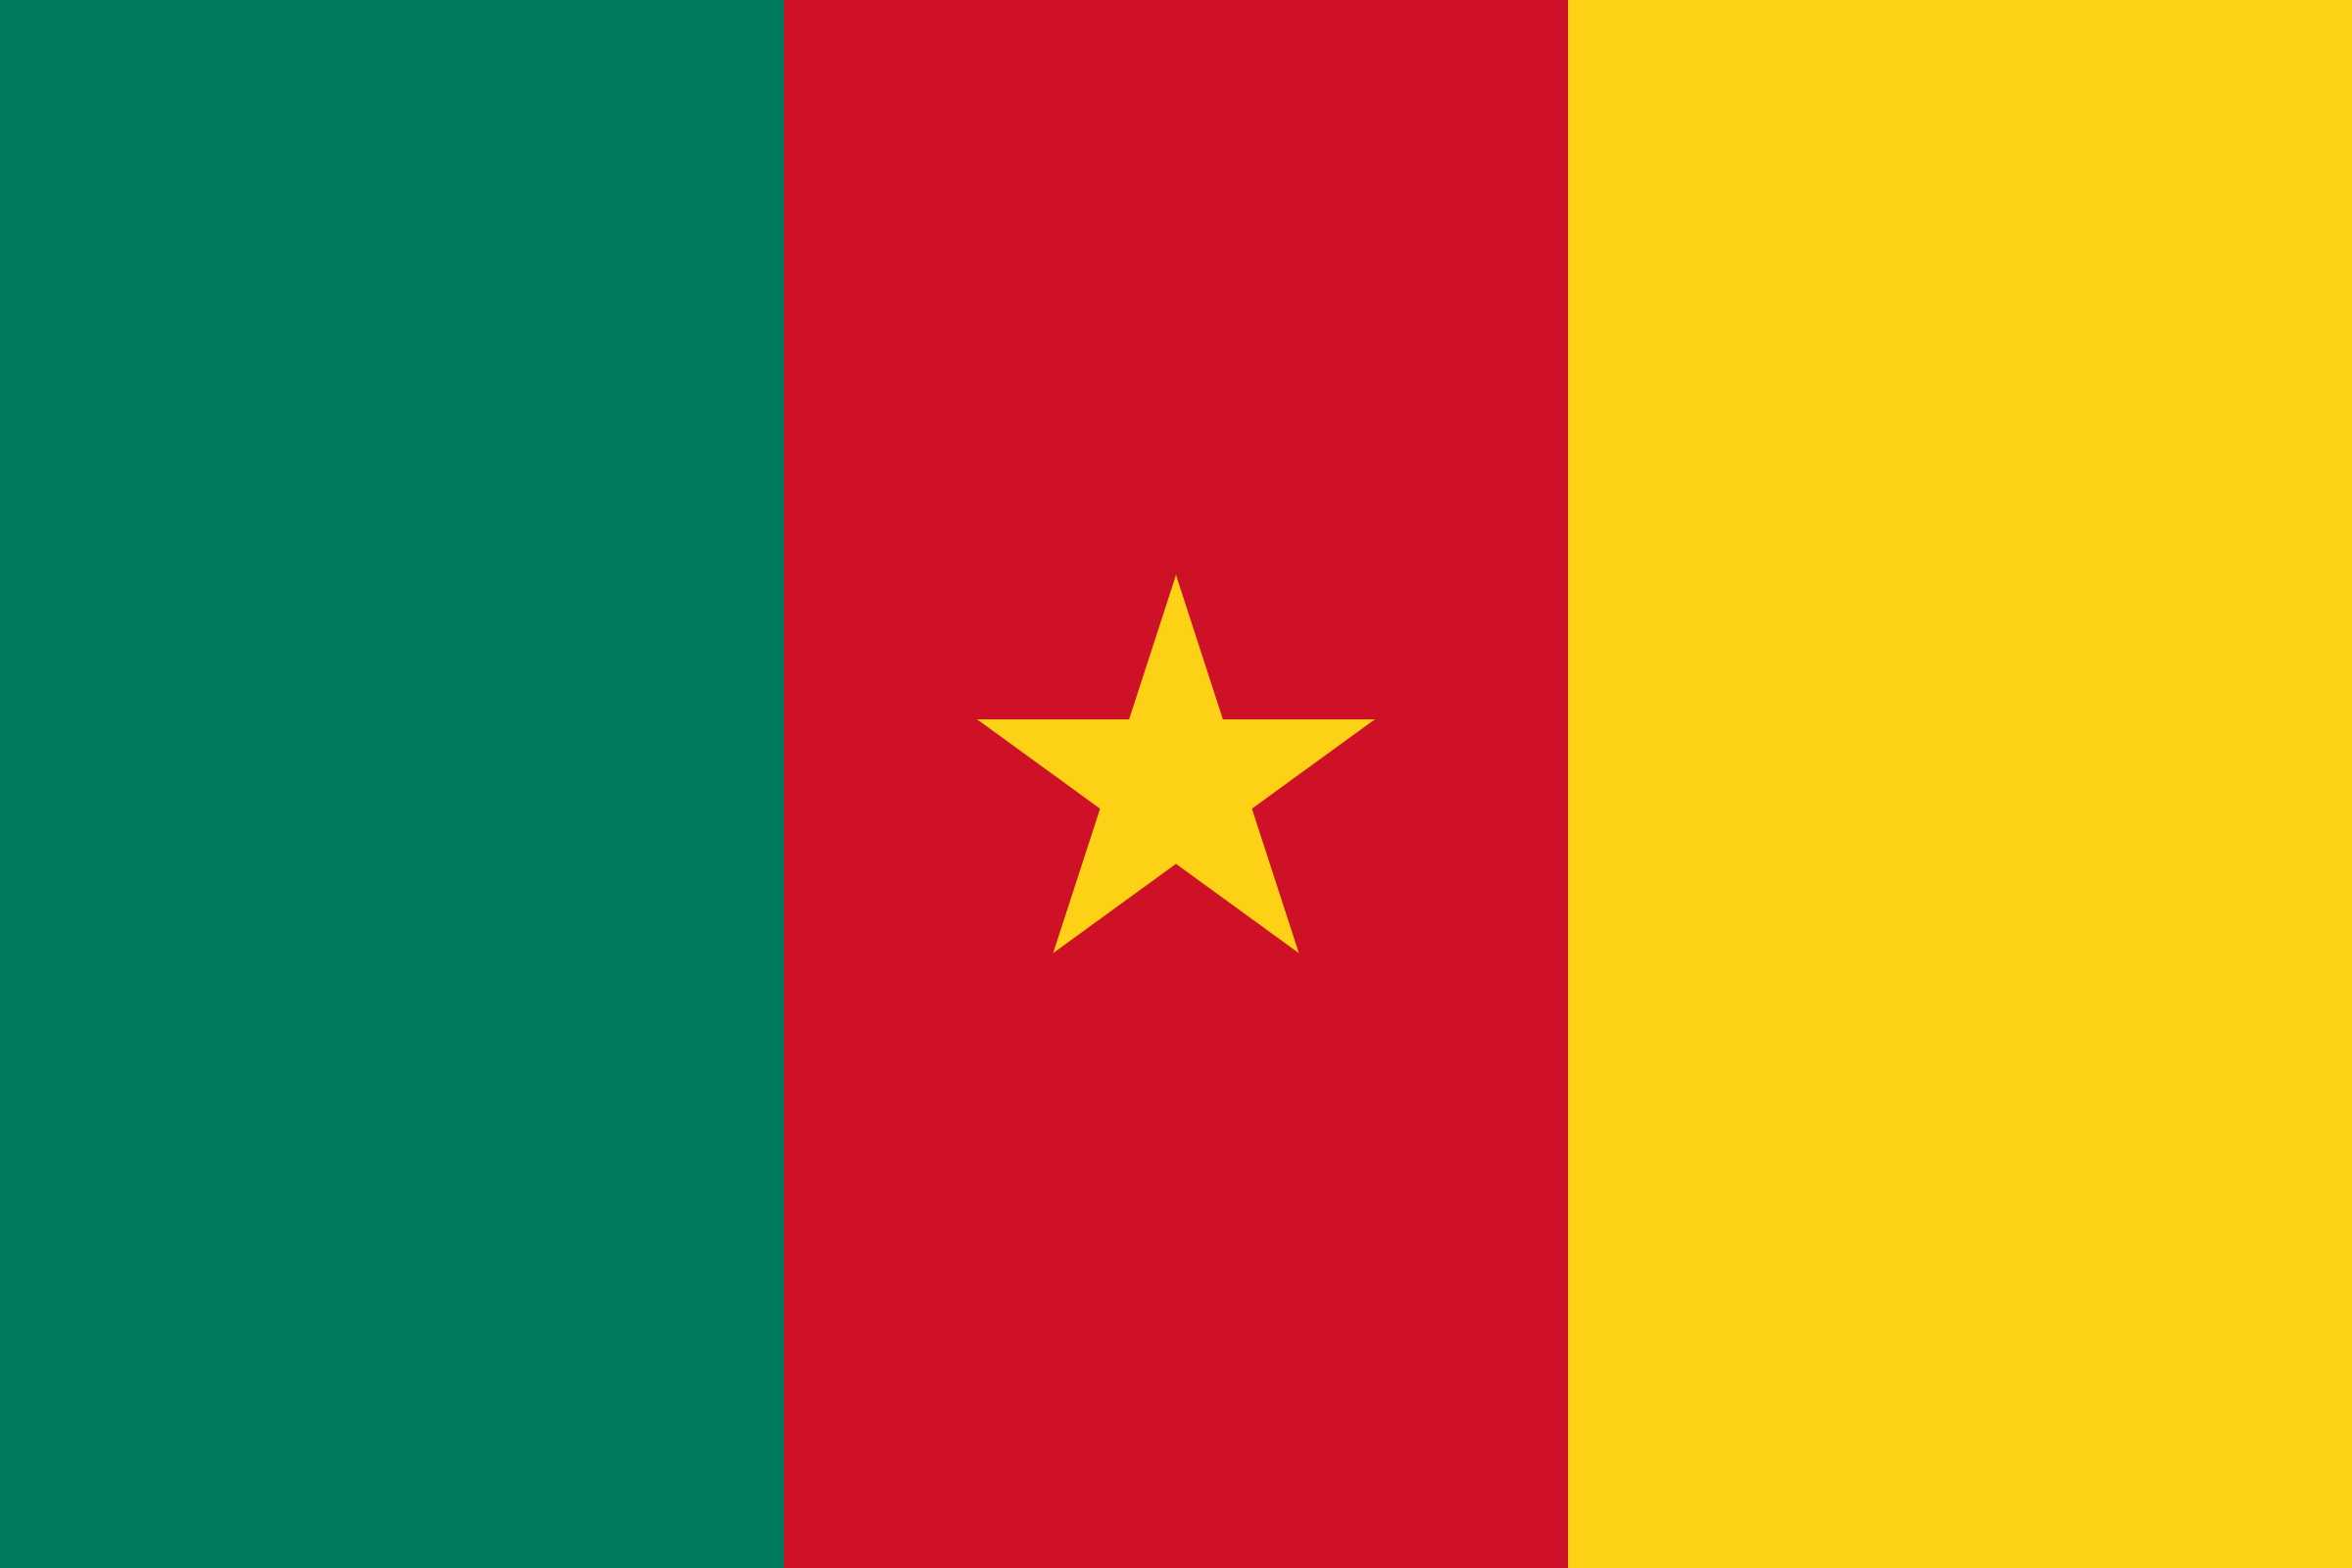 پرچم کامرون